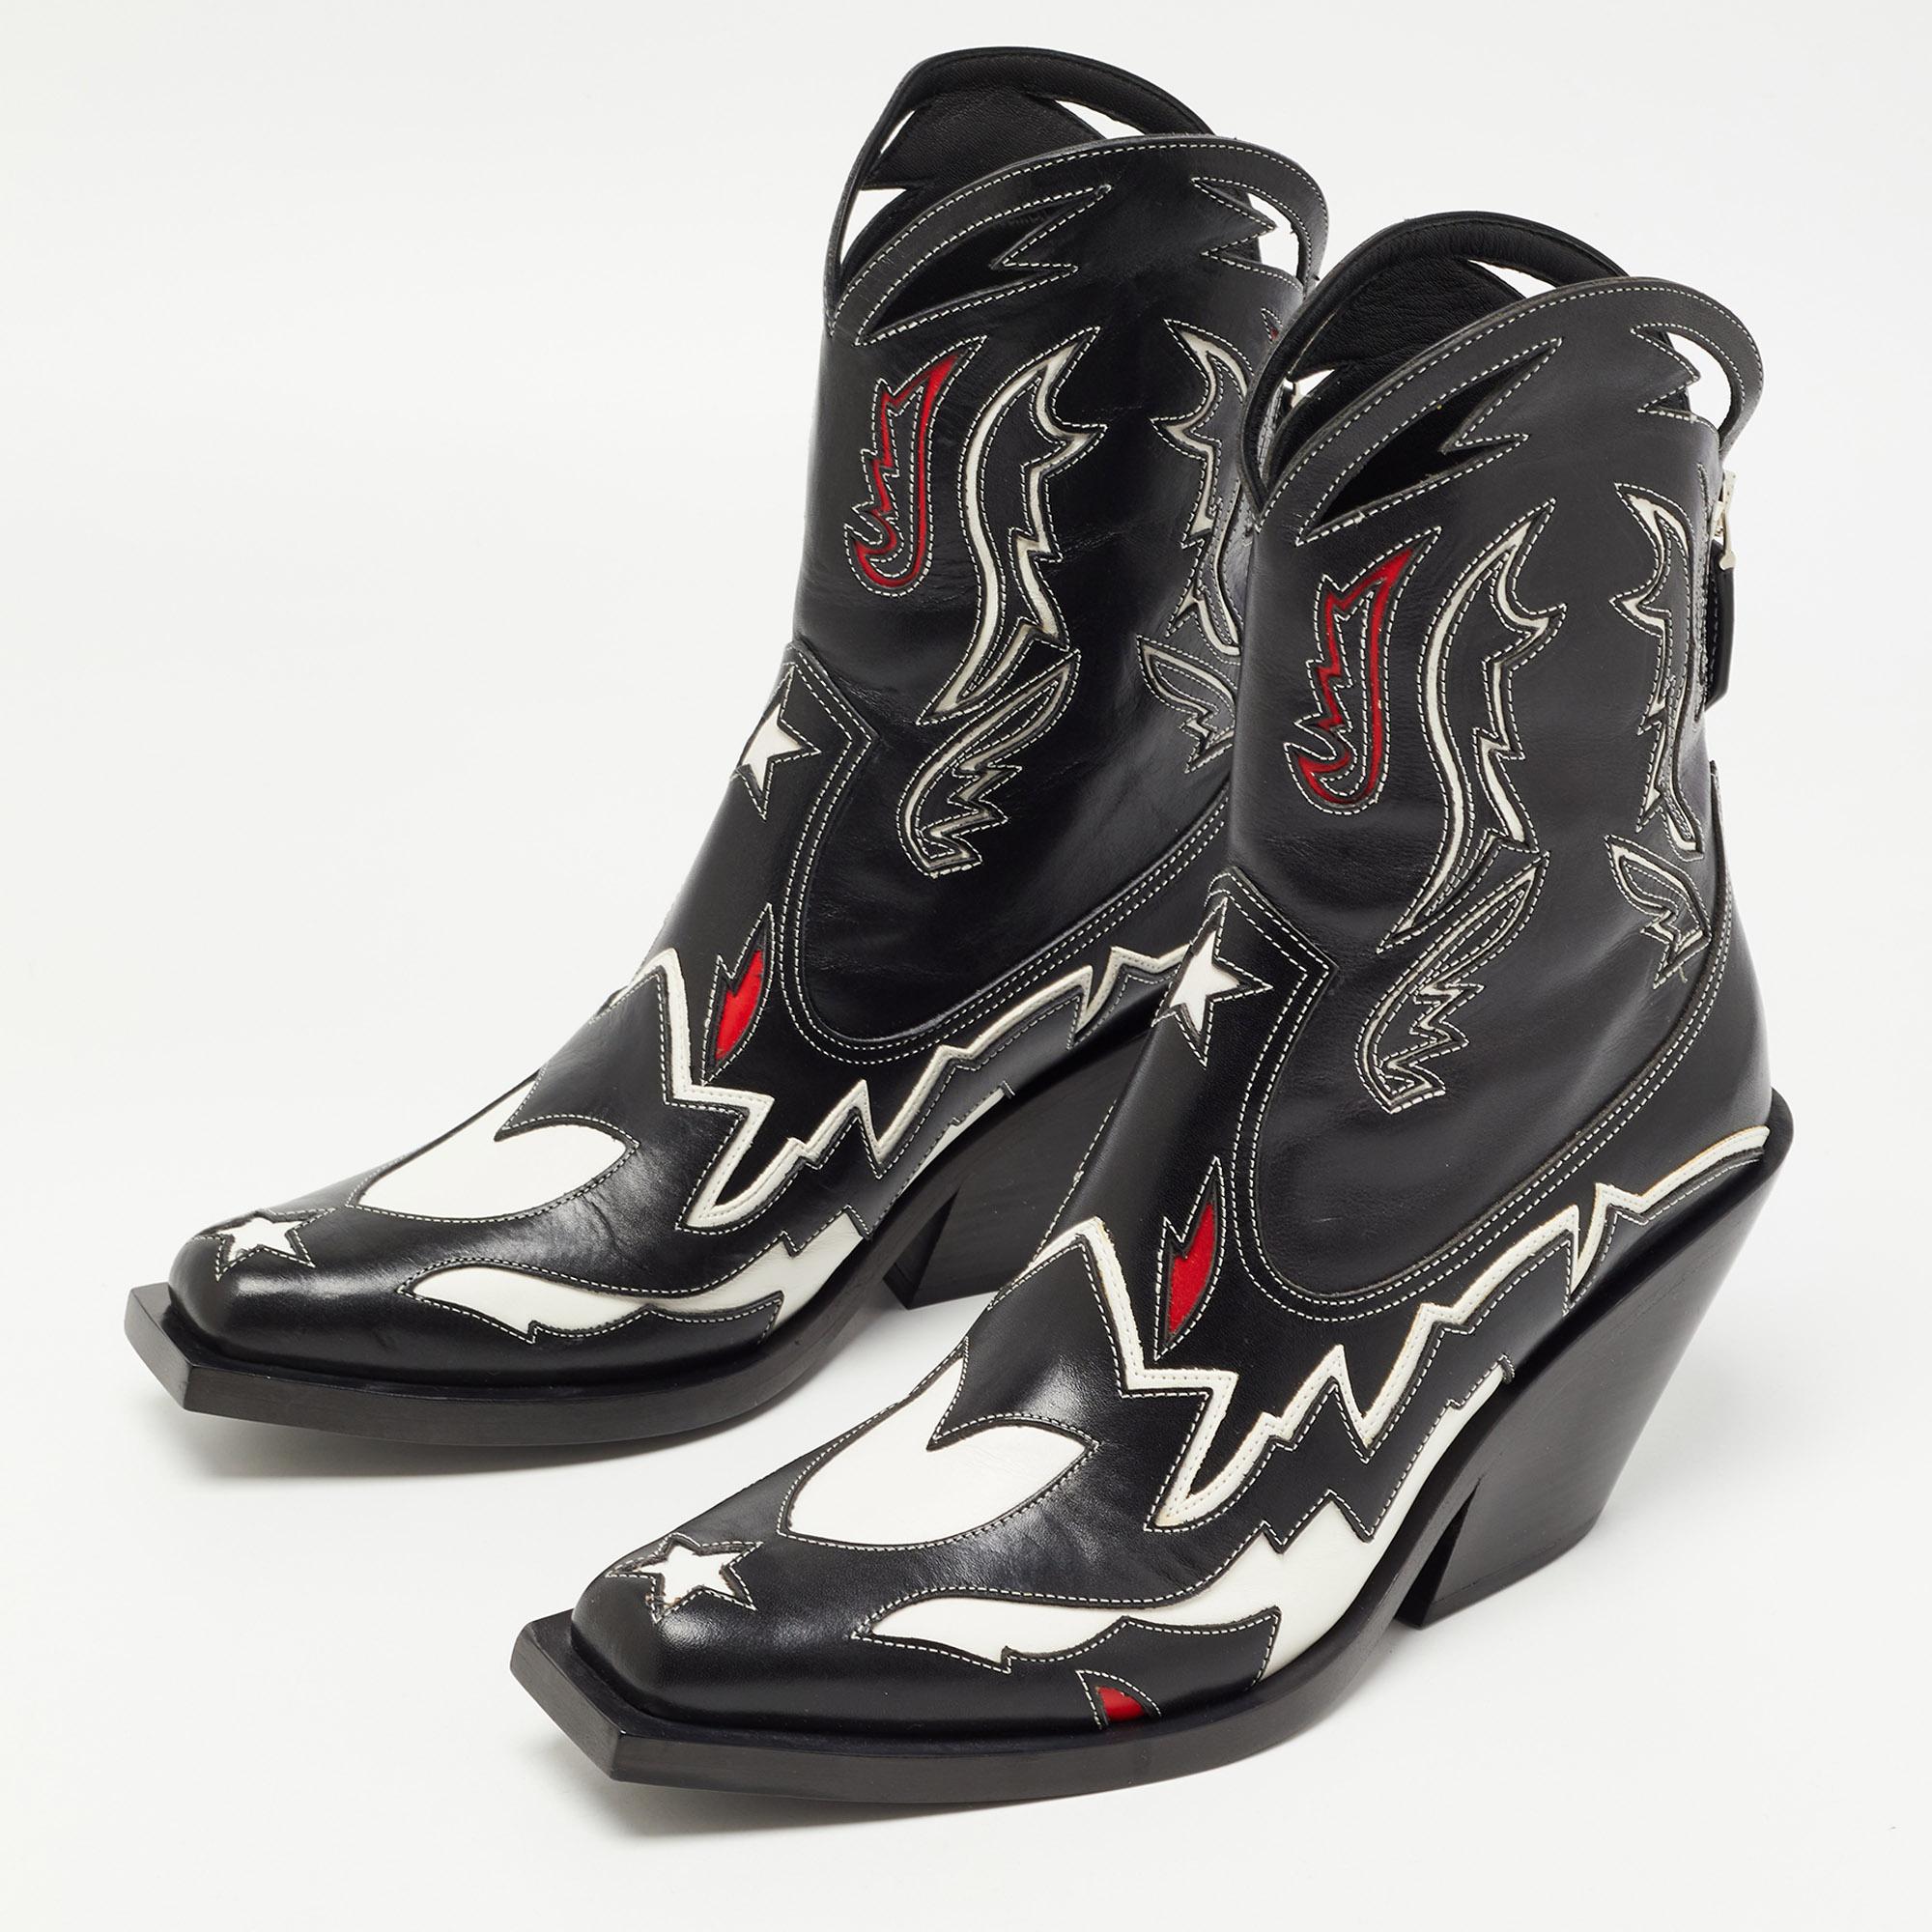 Burberry Black Leather Topstitch Applique Matlock Cowboy Ankle Boots Size 38 1